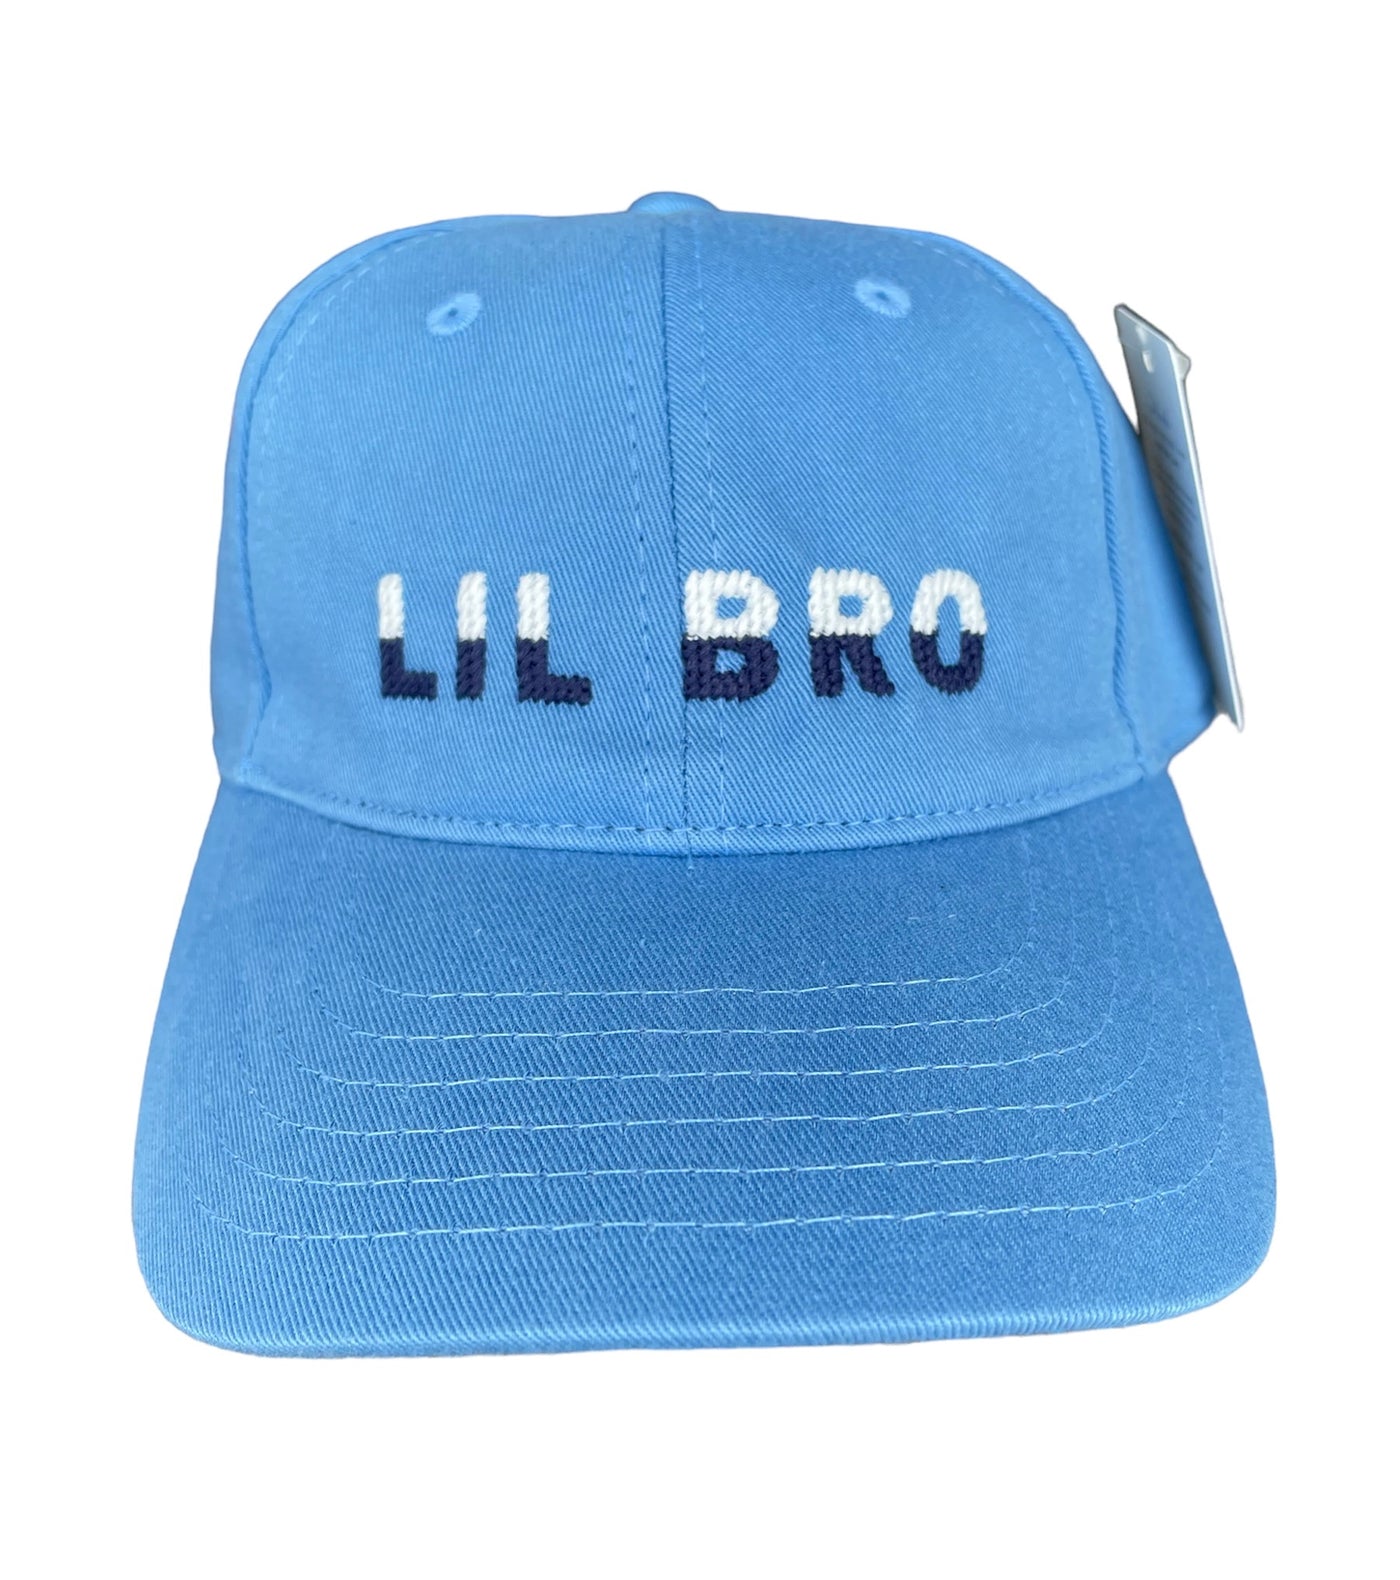 Kids Lil Bro on Light Blue  Baseball Hat